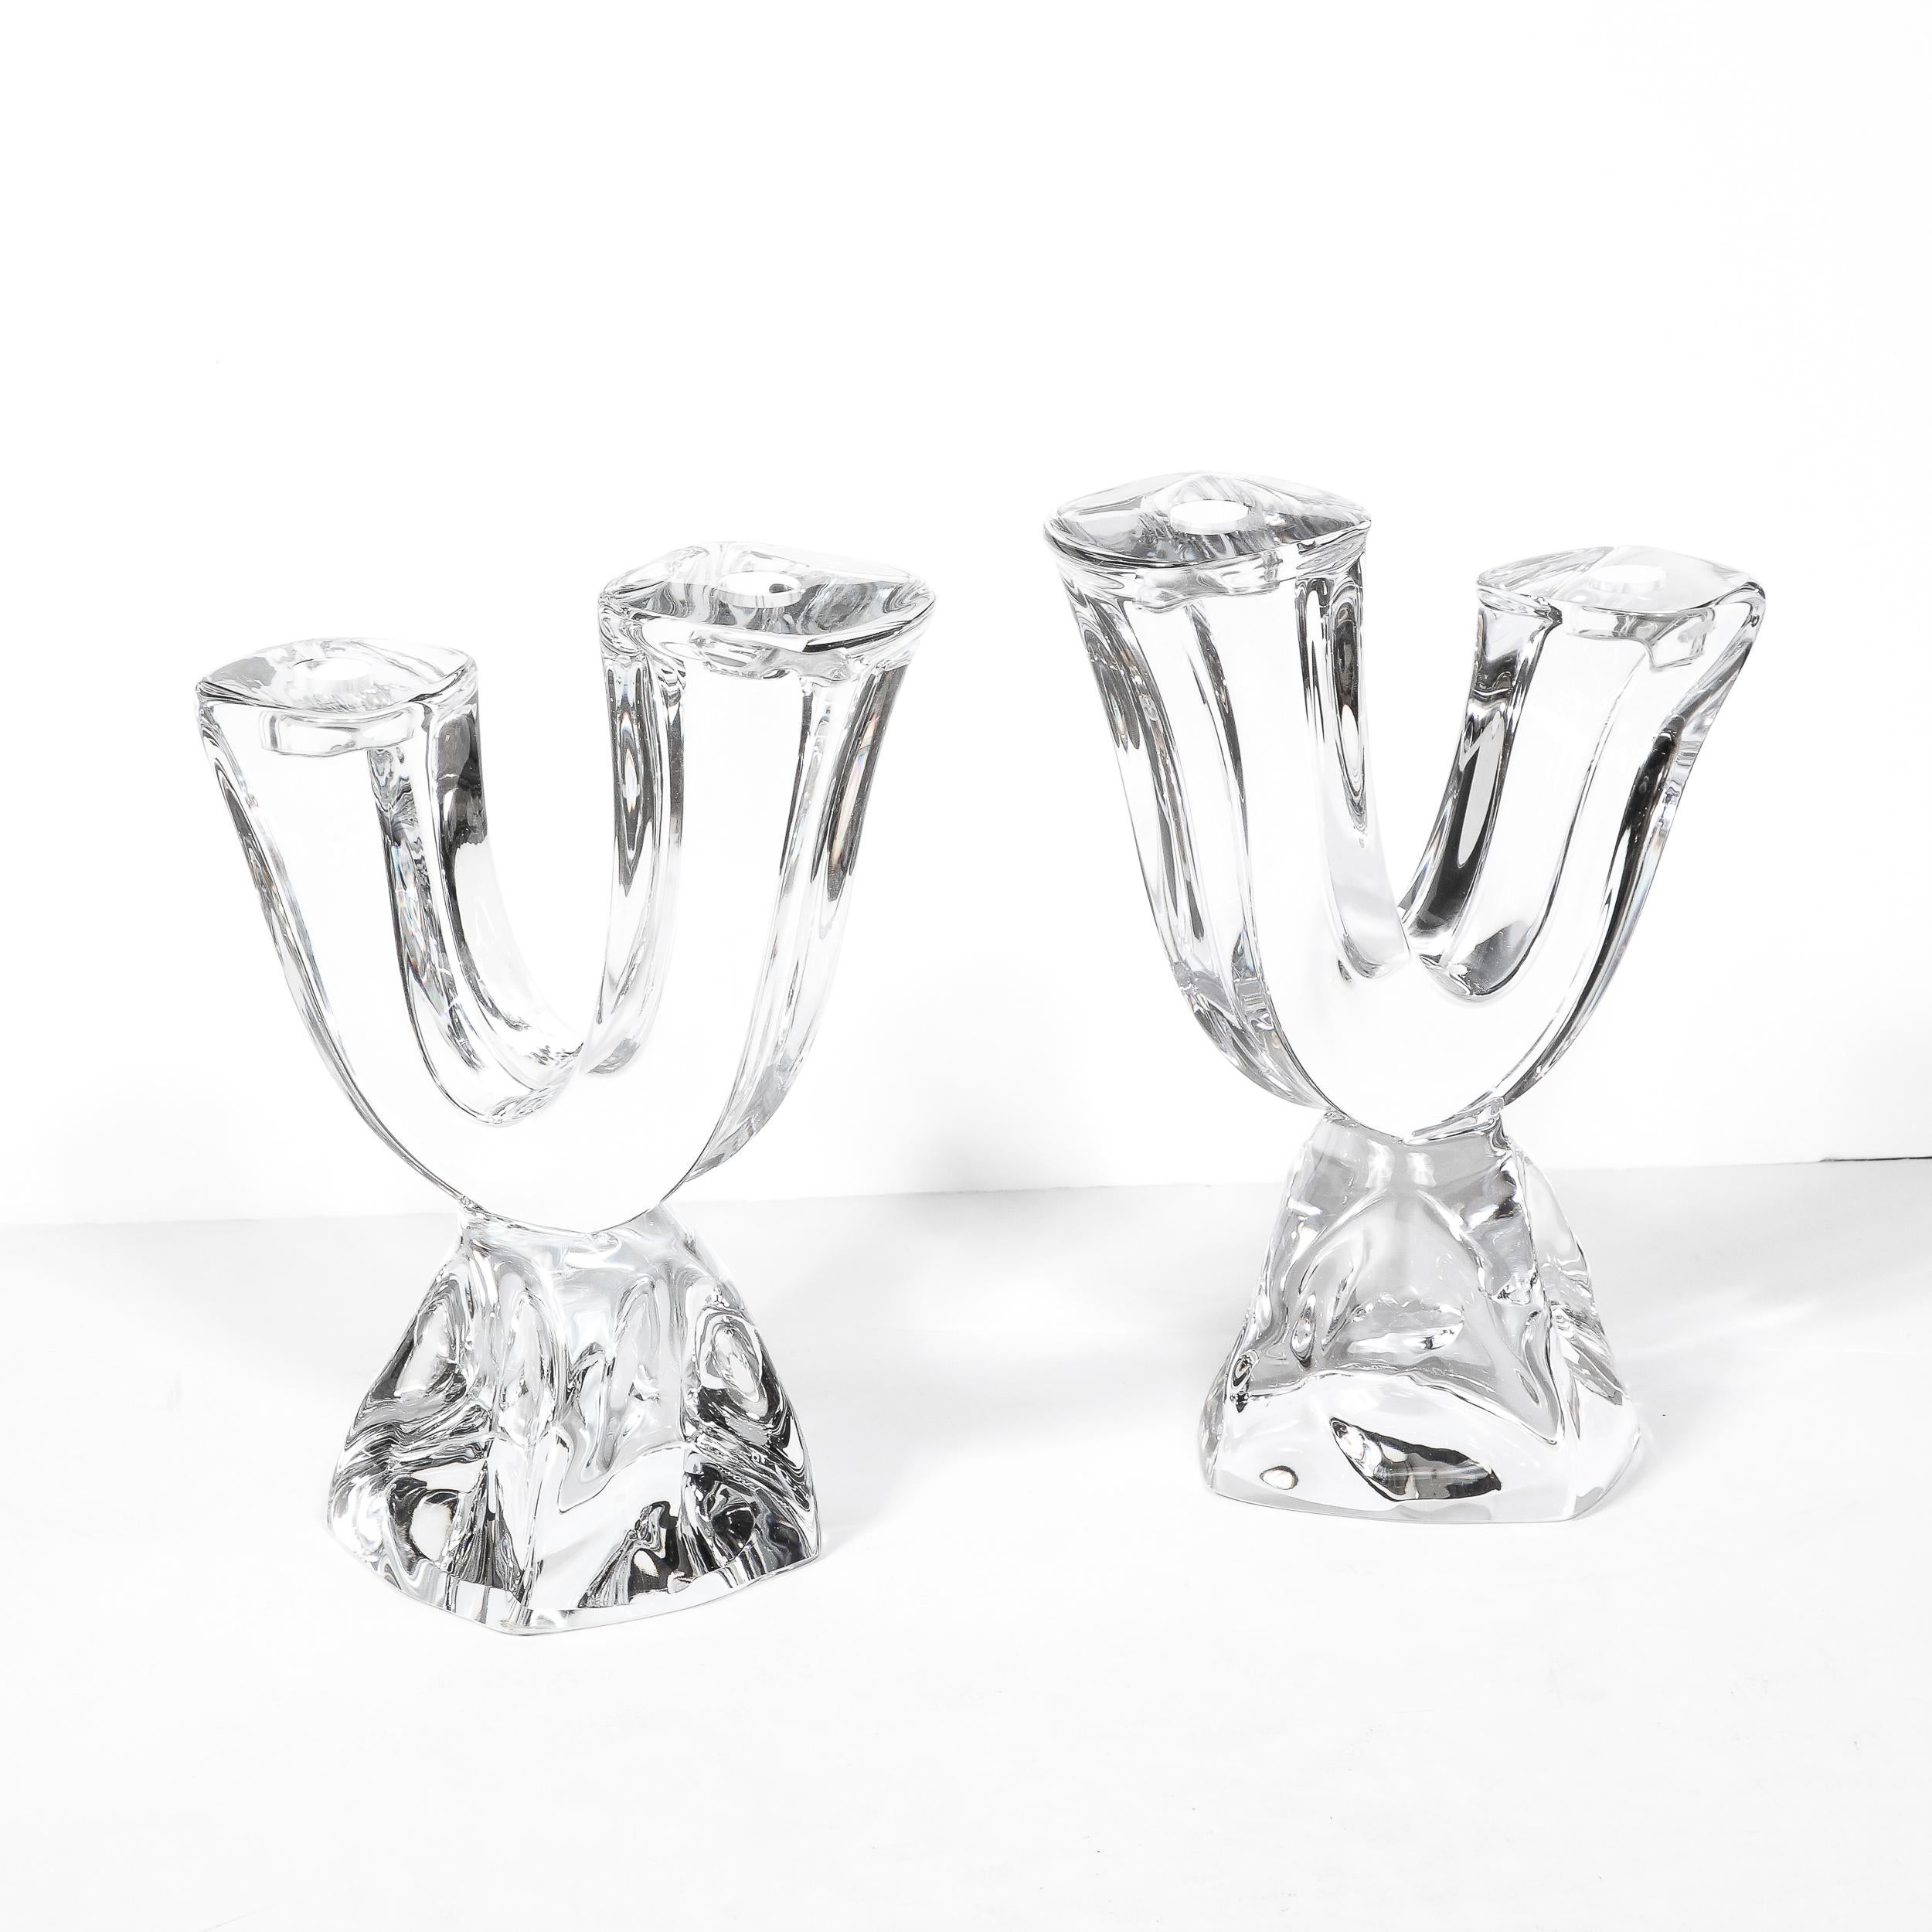 Pair of Mid-Century Modernist Sculptural Crystal Candelabras signed Daum 7